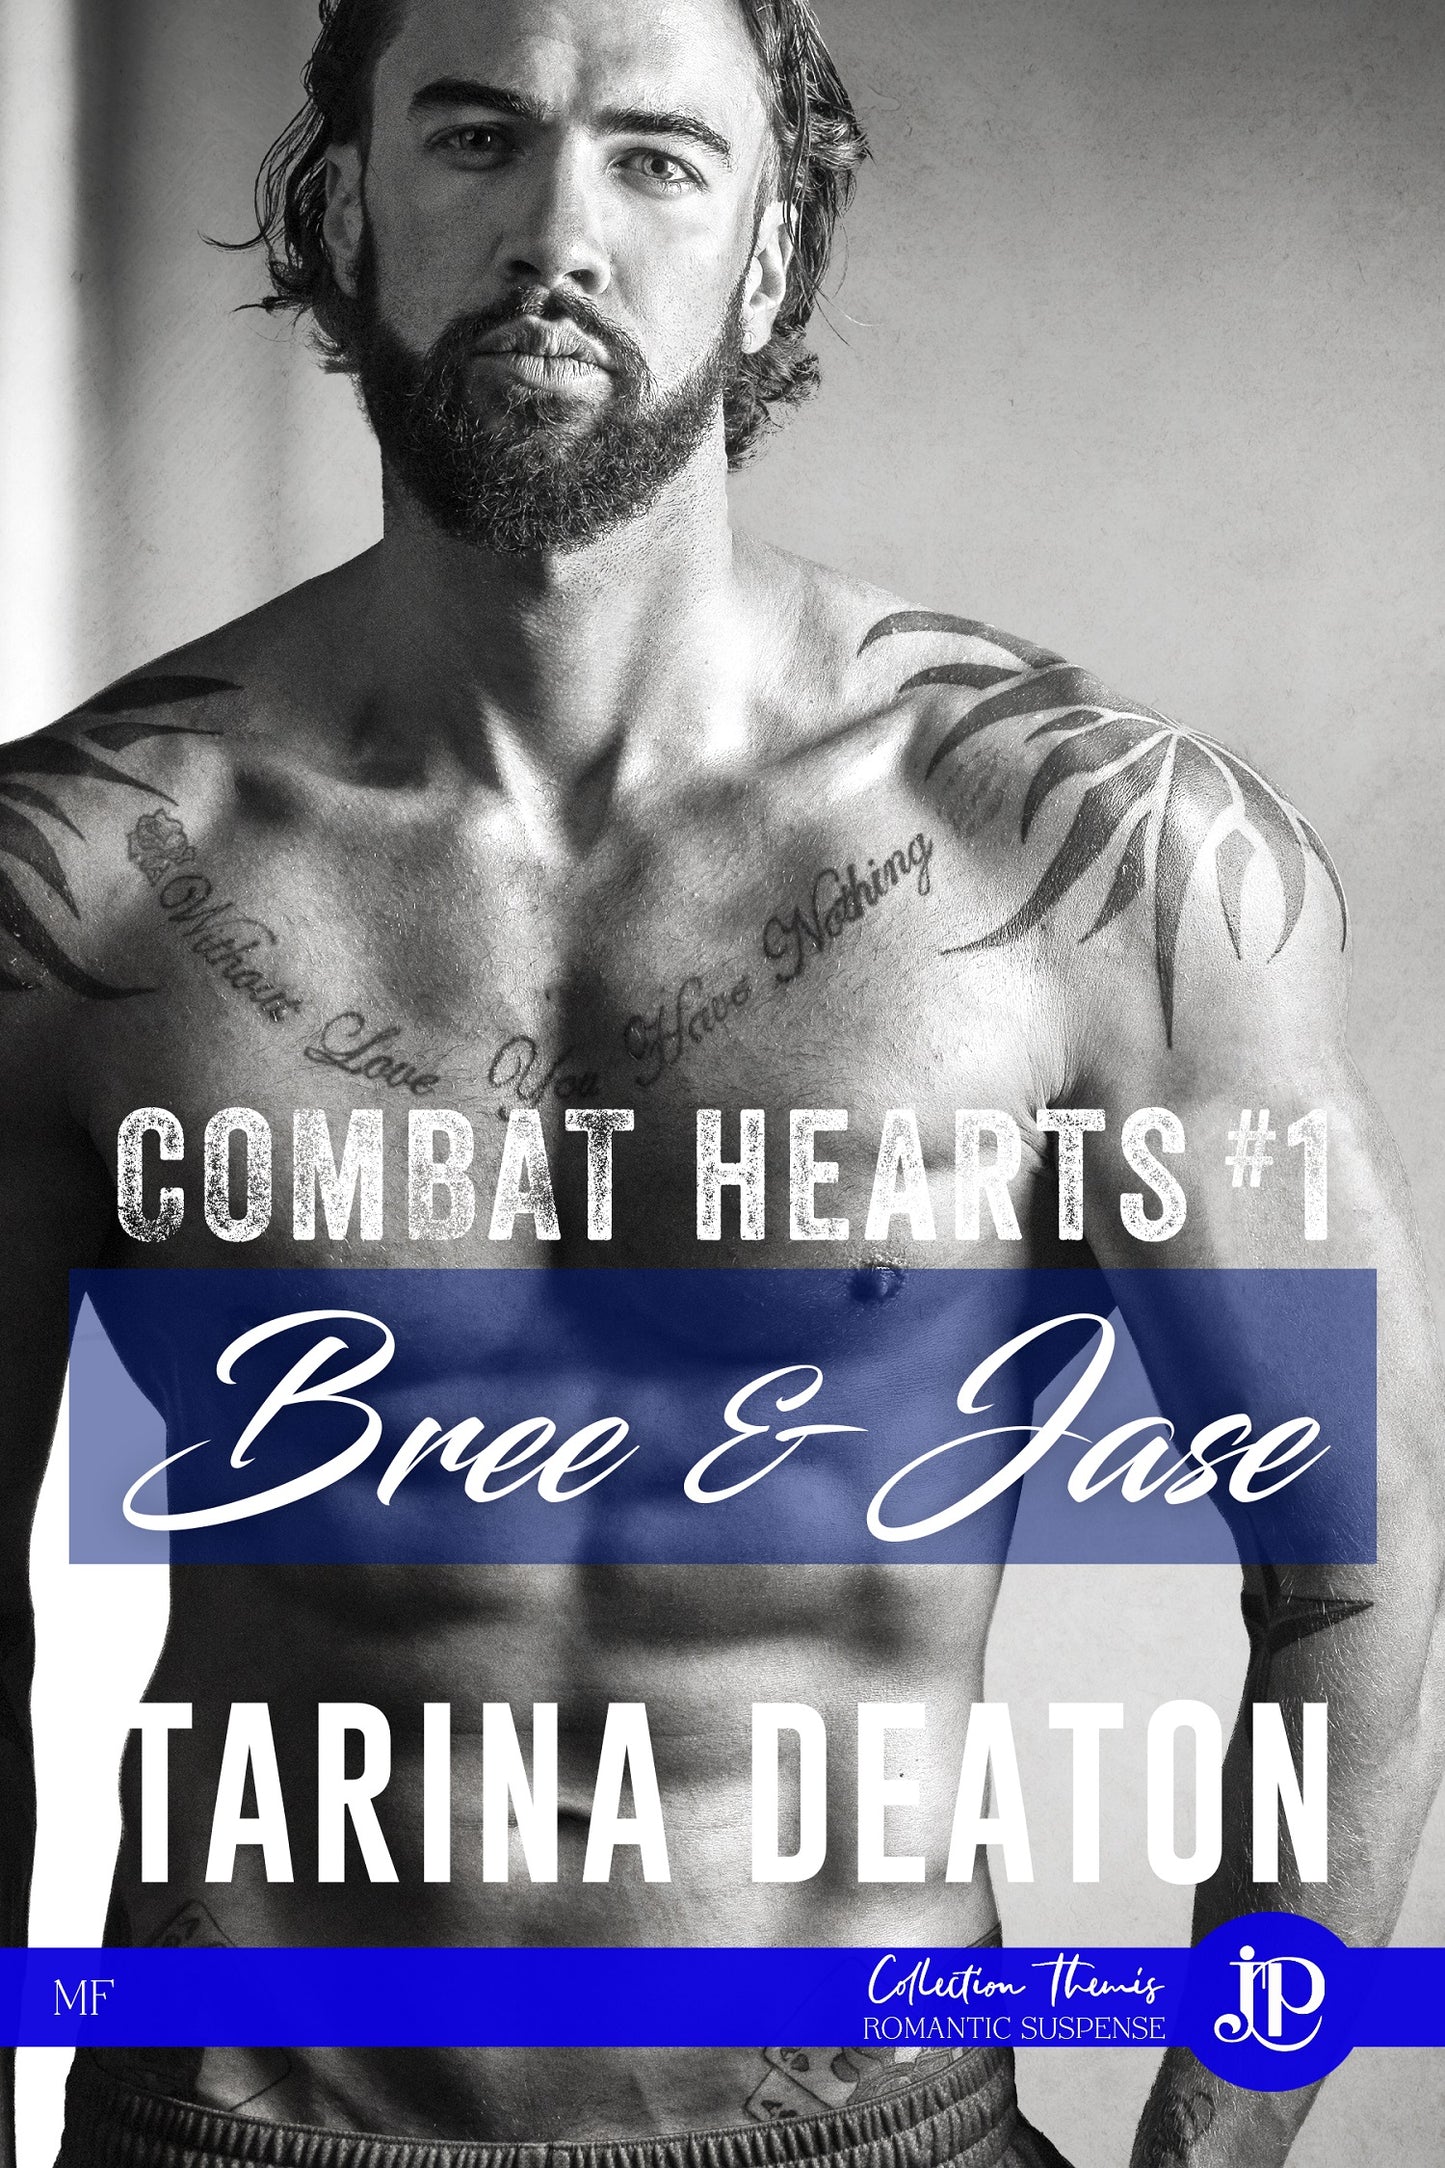 Combat hearts #1 - Bree & Jase